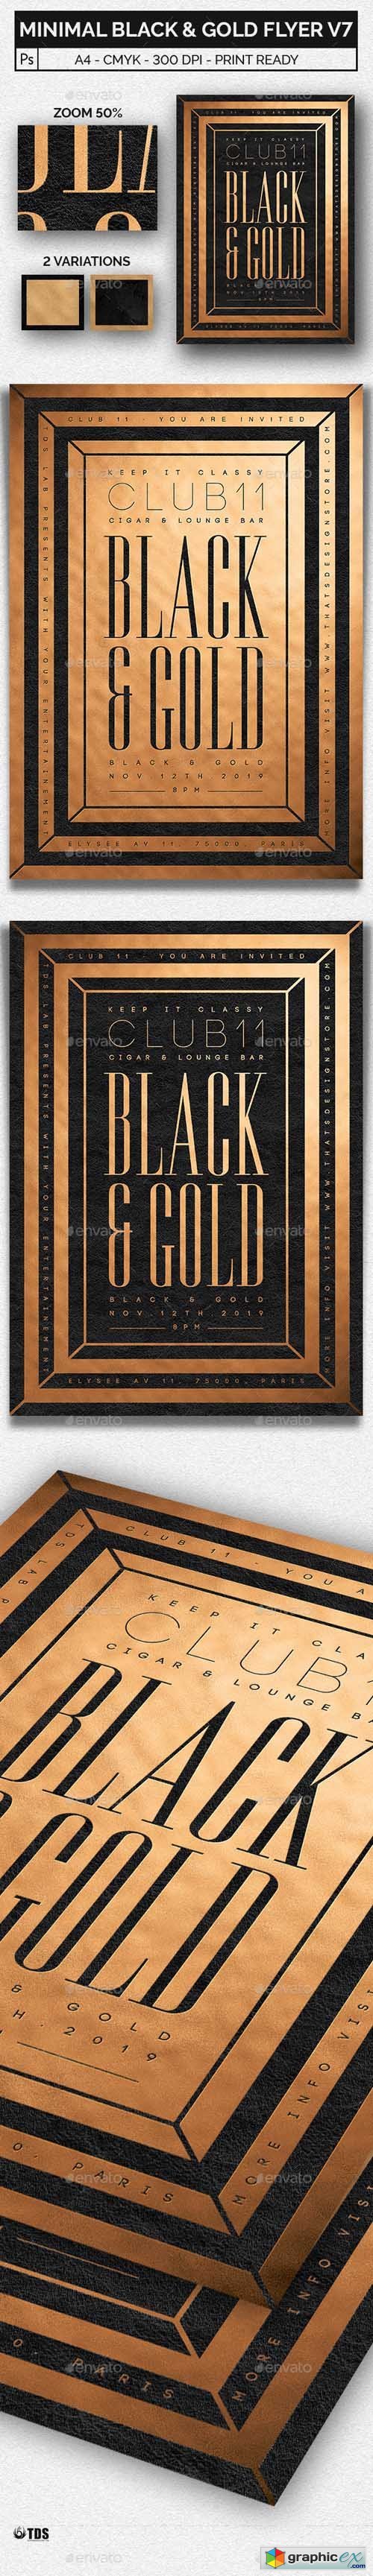 Minimal Black and Gold Flyer Template V7